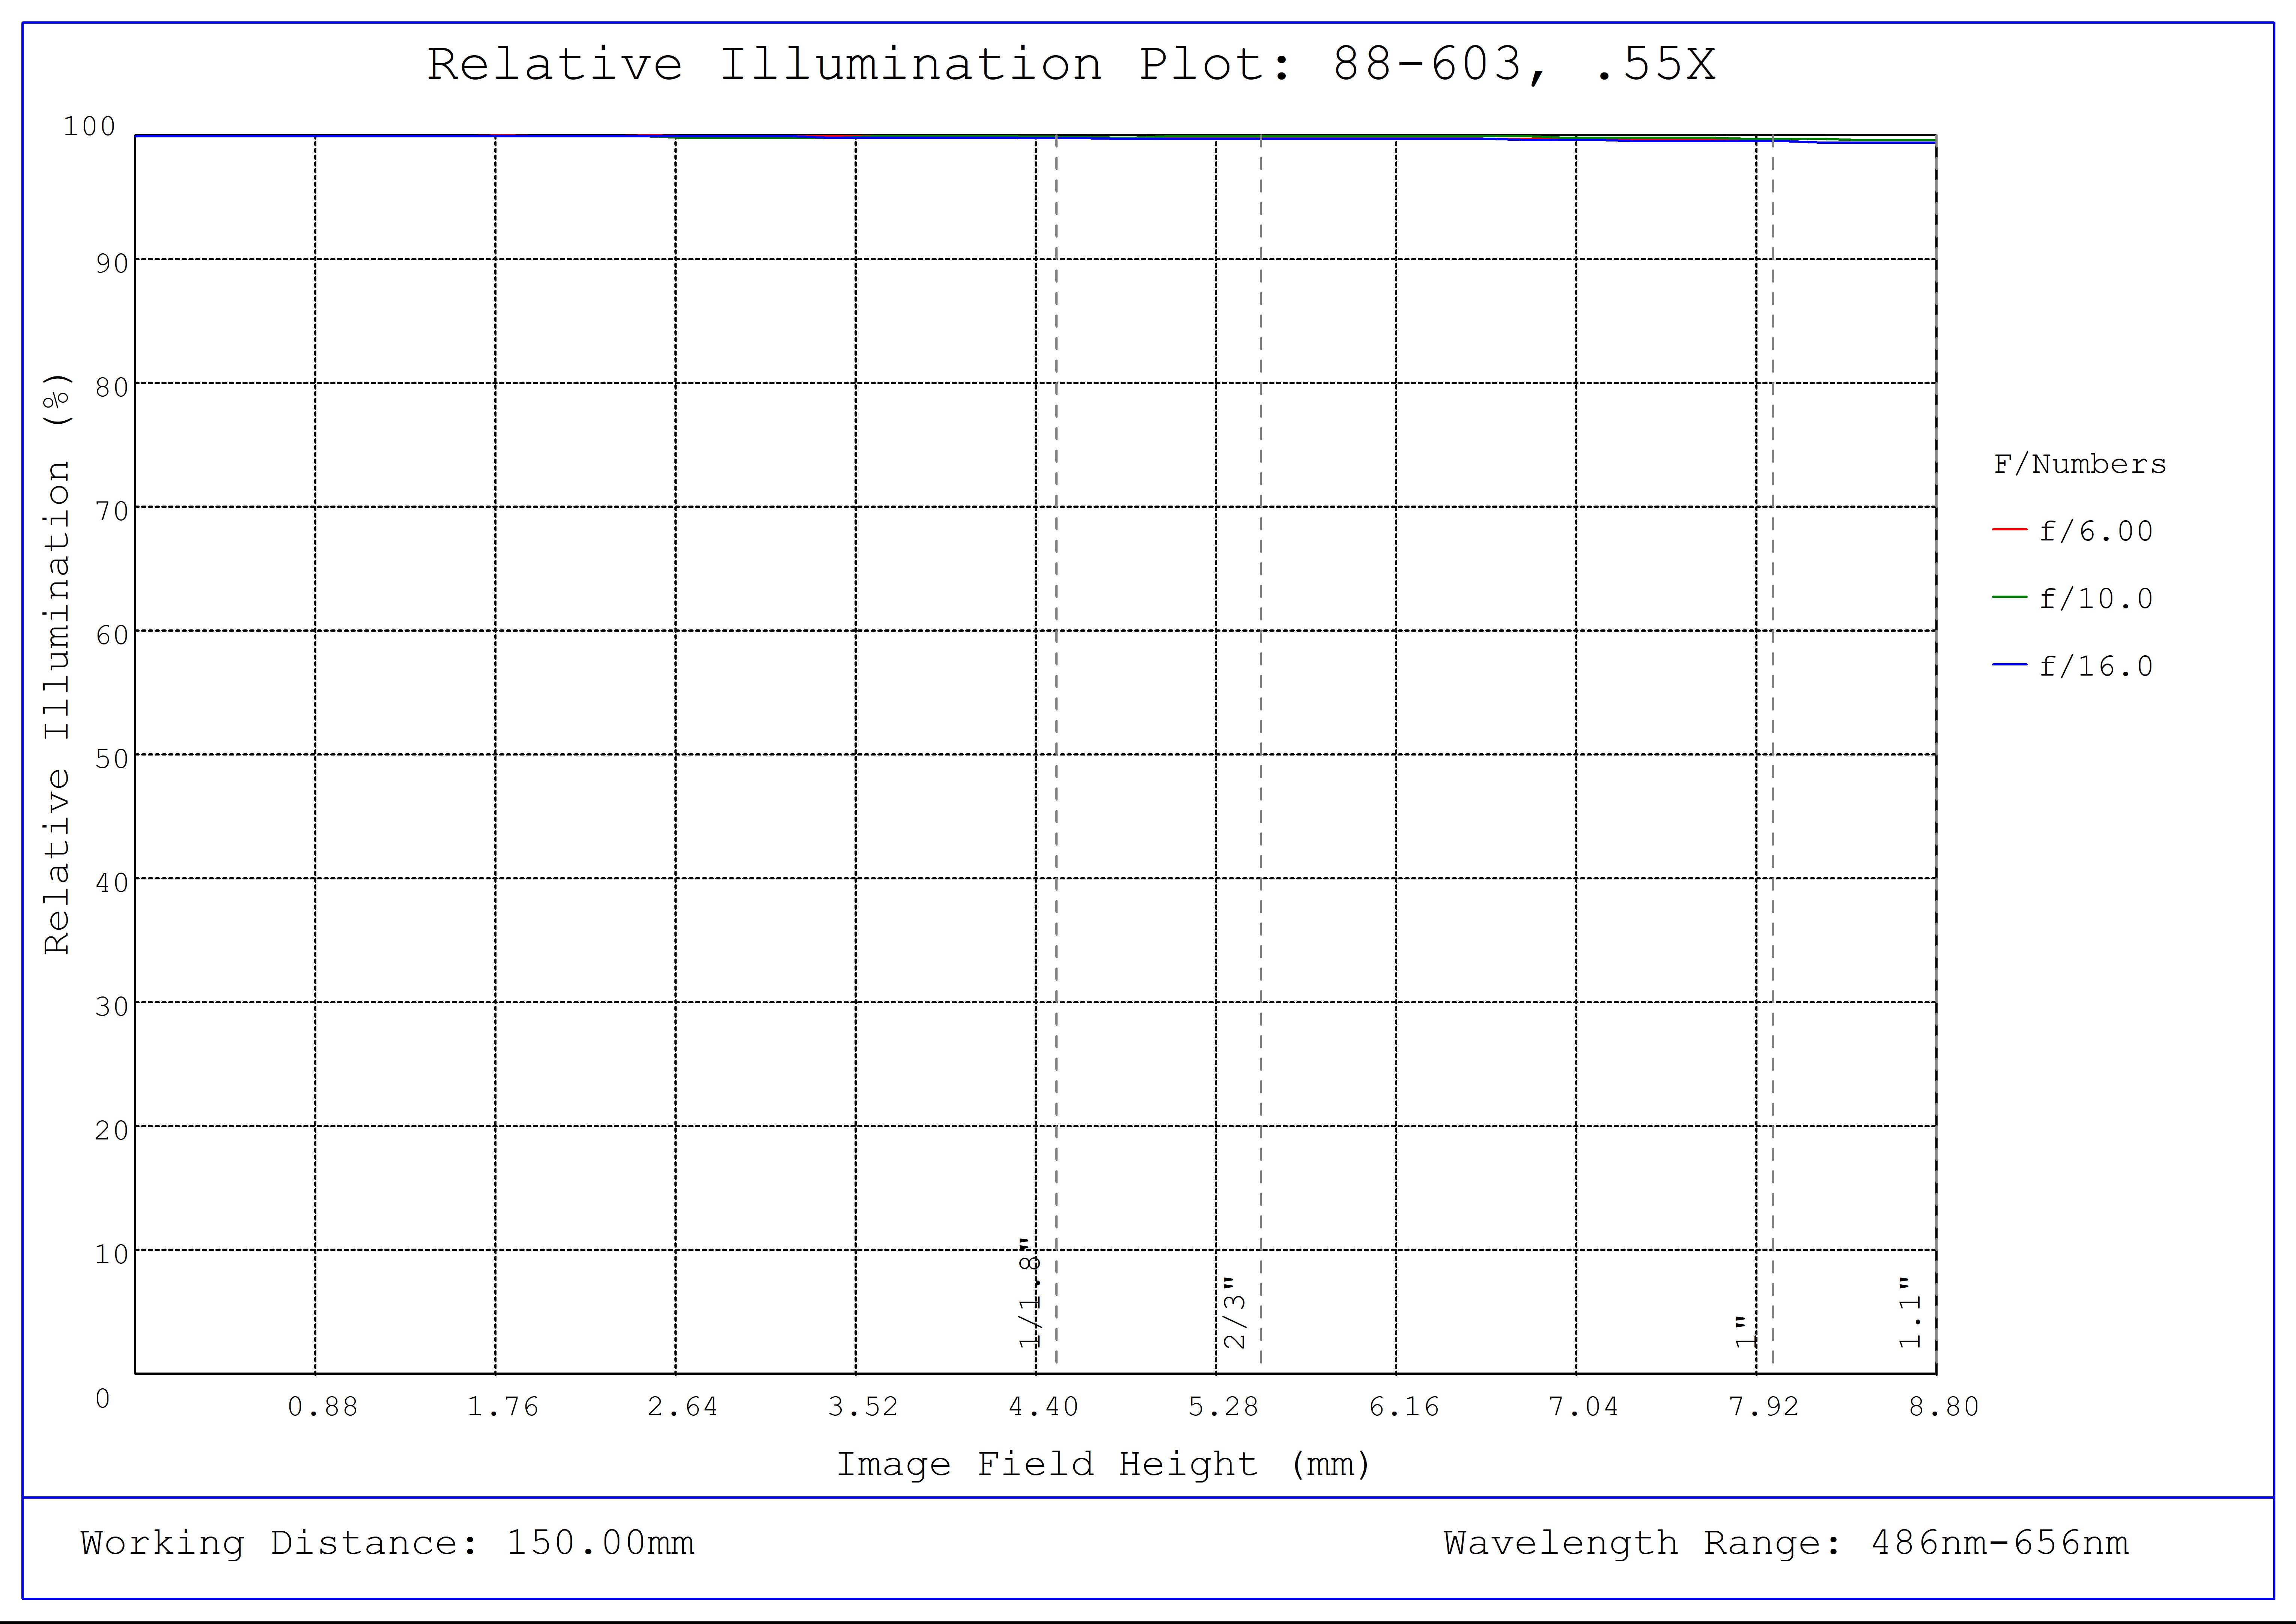 #88-603, 0.55X CobaltTL Telecentric Lens, Relative Illumination Plot